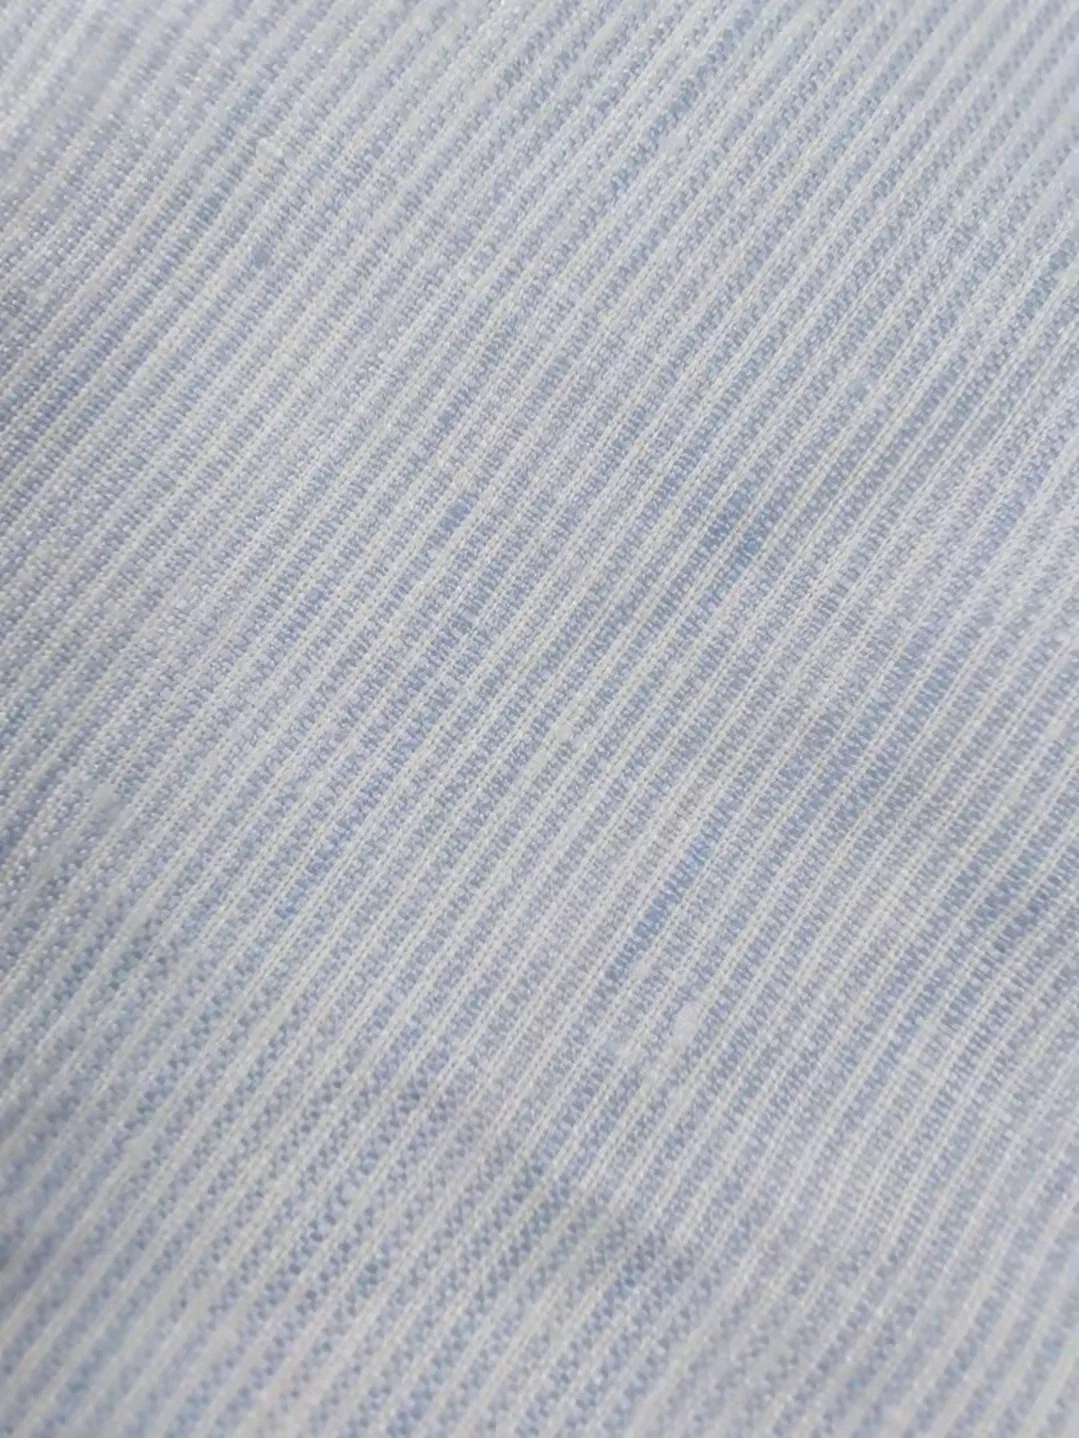 Pinstriped de alta calidad 100% lino tejido de prendas de vestir camisas de lino puro Fabric